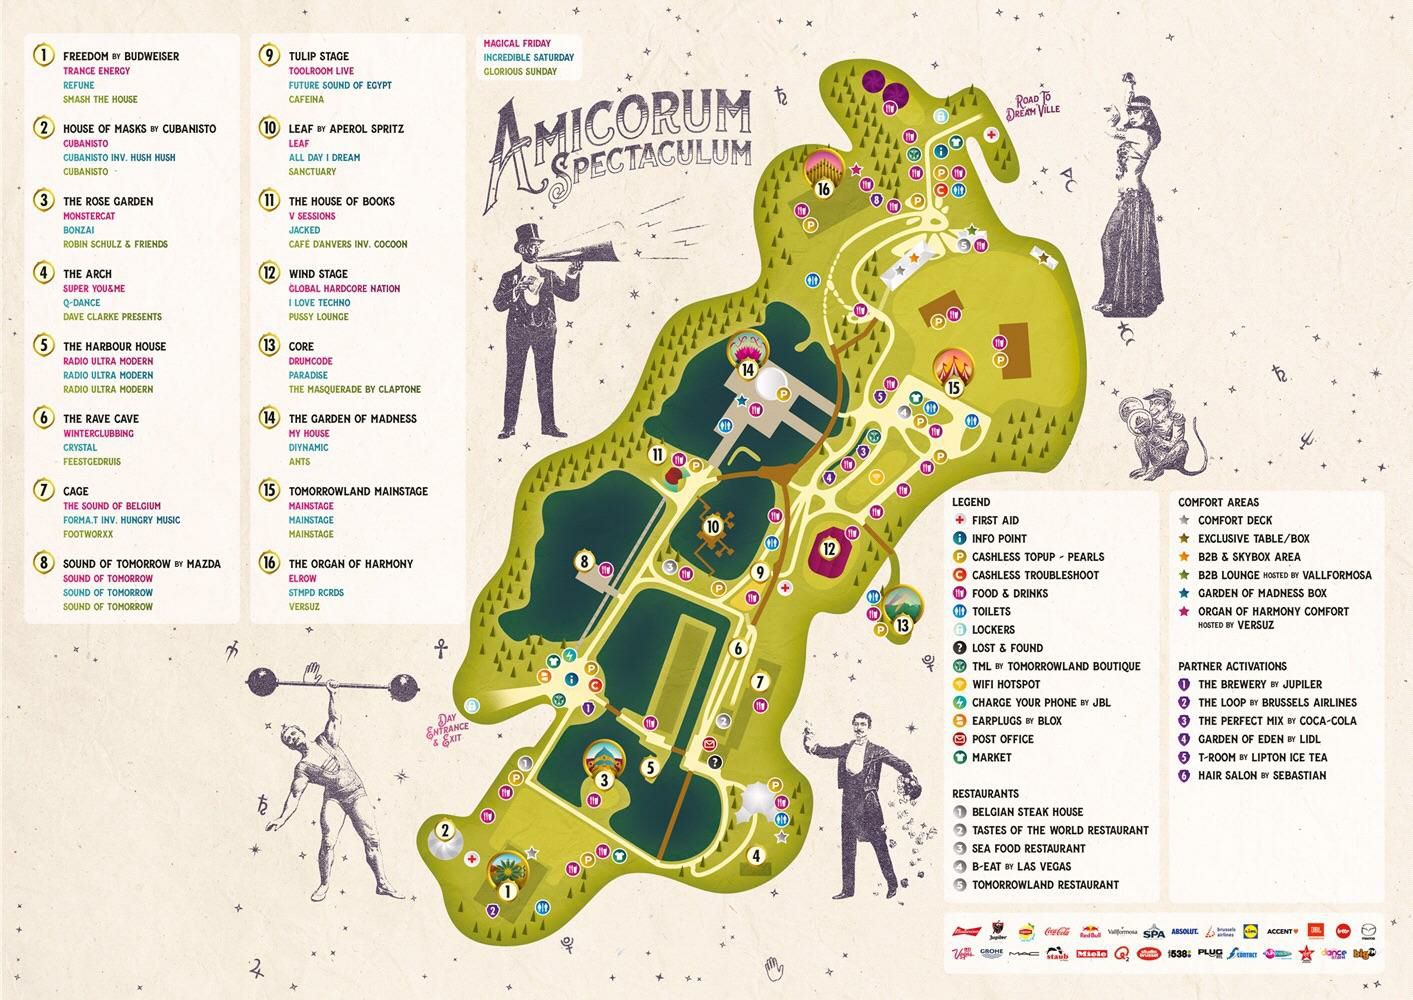 Tomorrowland Map